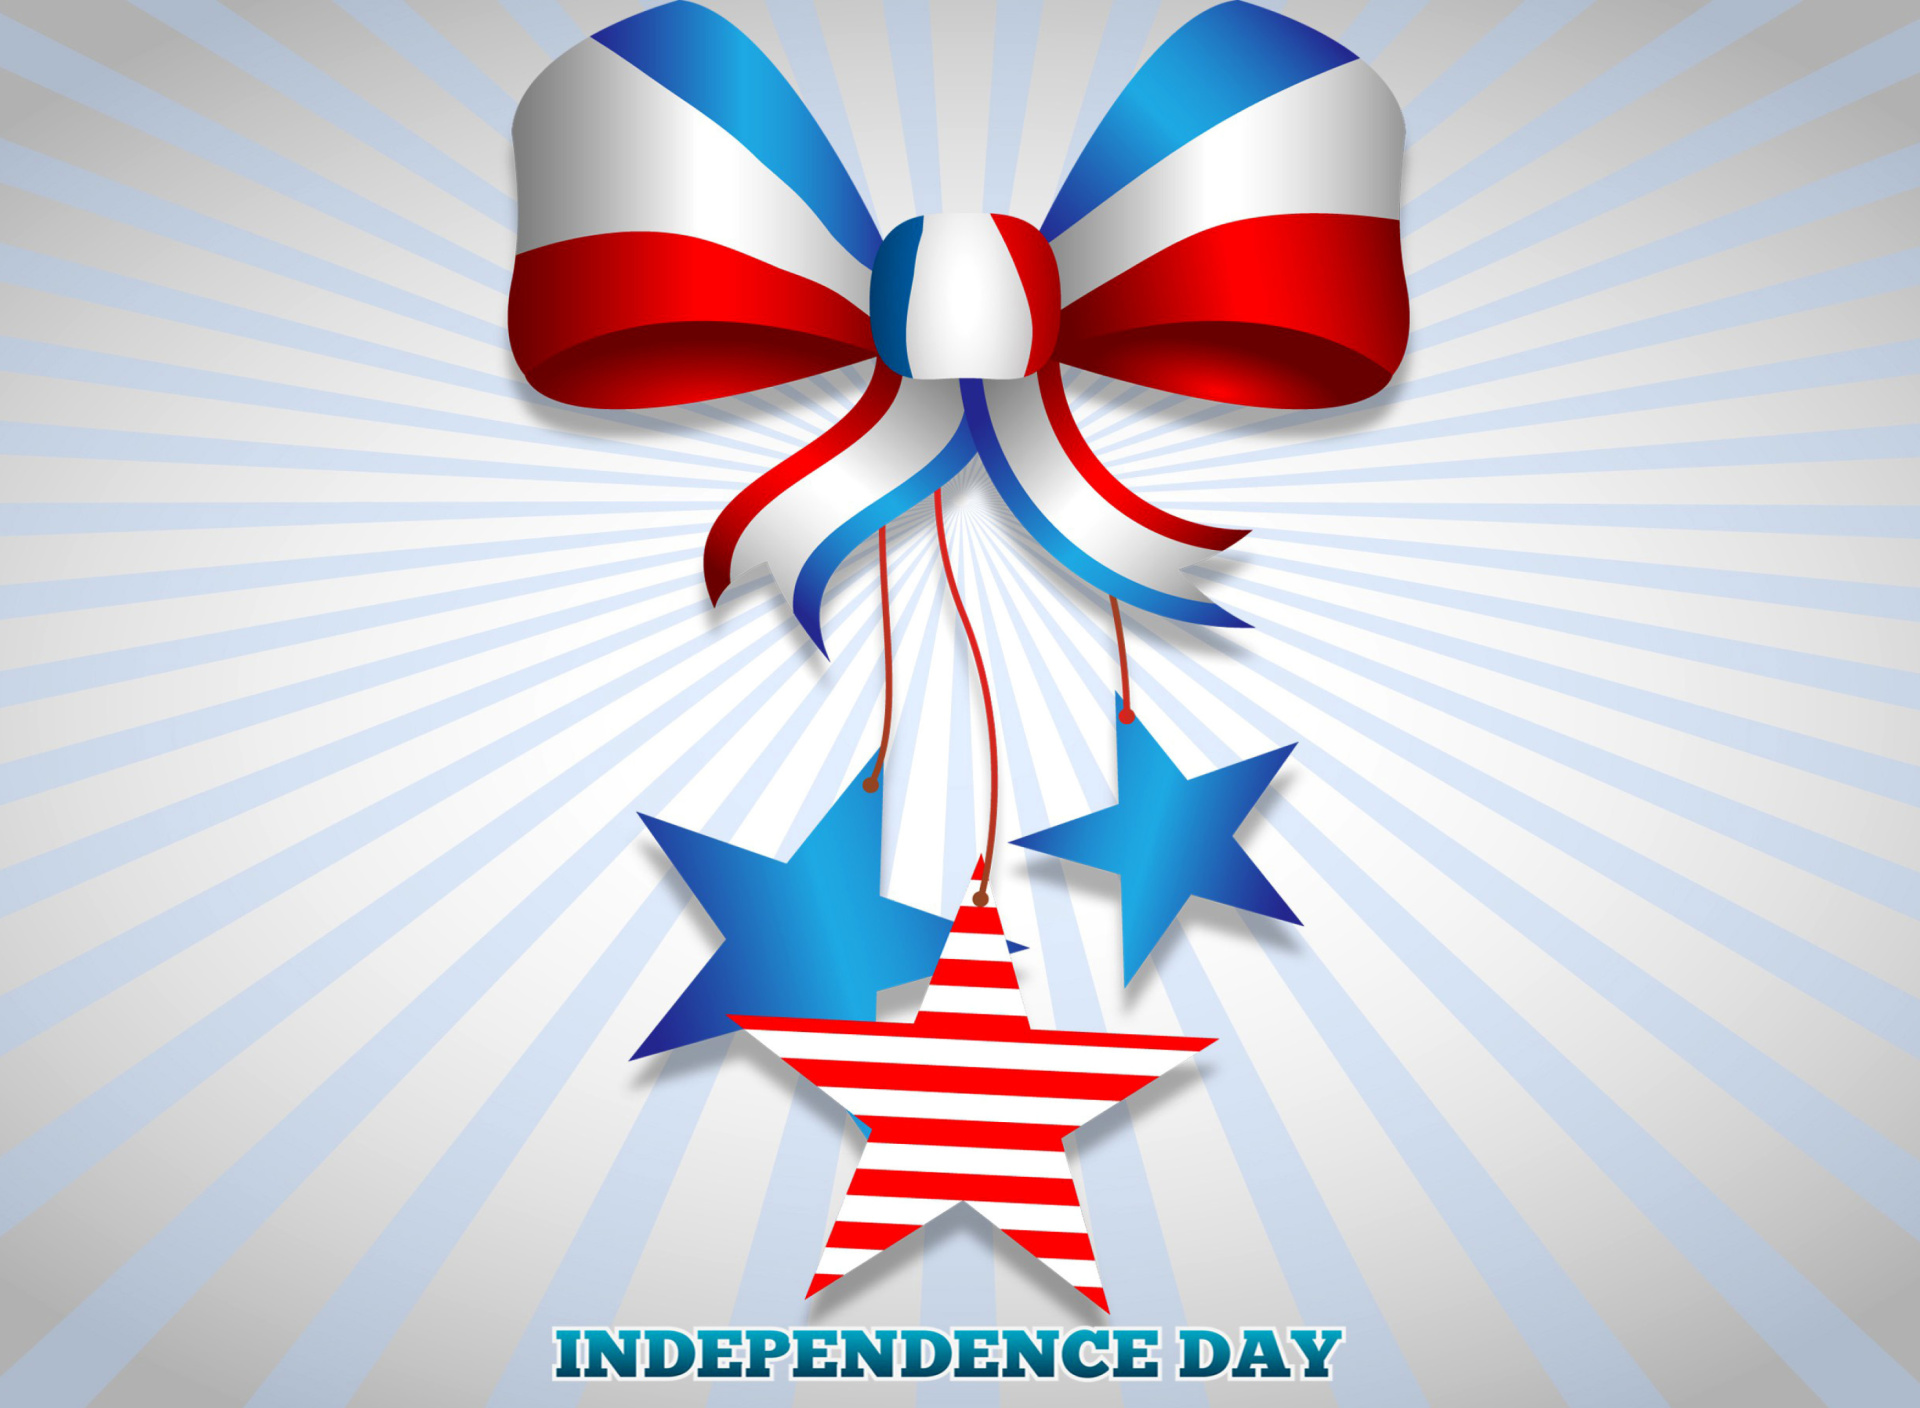 Fondo de pantalla United states america Idependence day 4th july 1920x1408